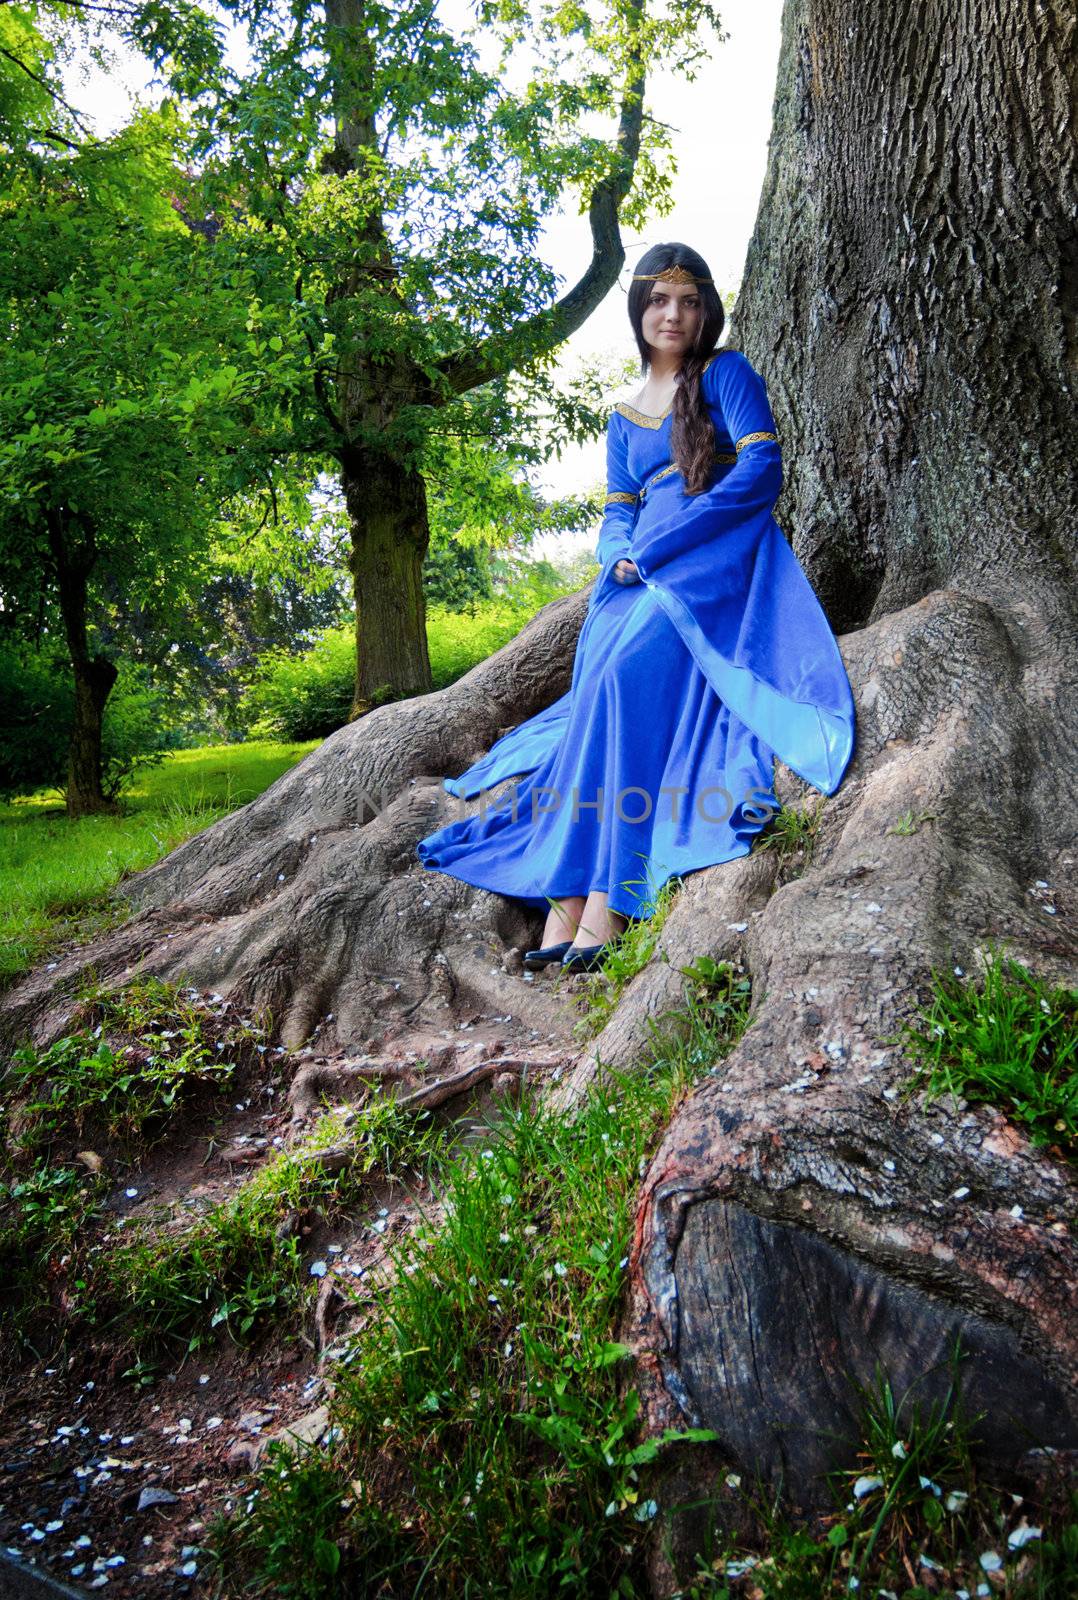 elf princess in roots of big tree by petr_malyshev